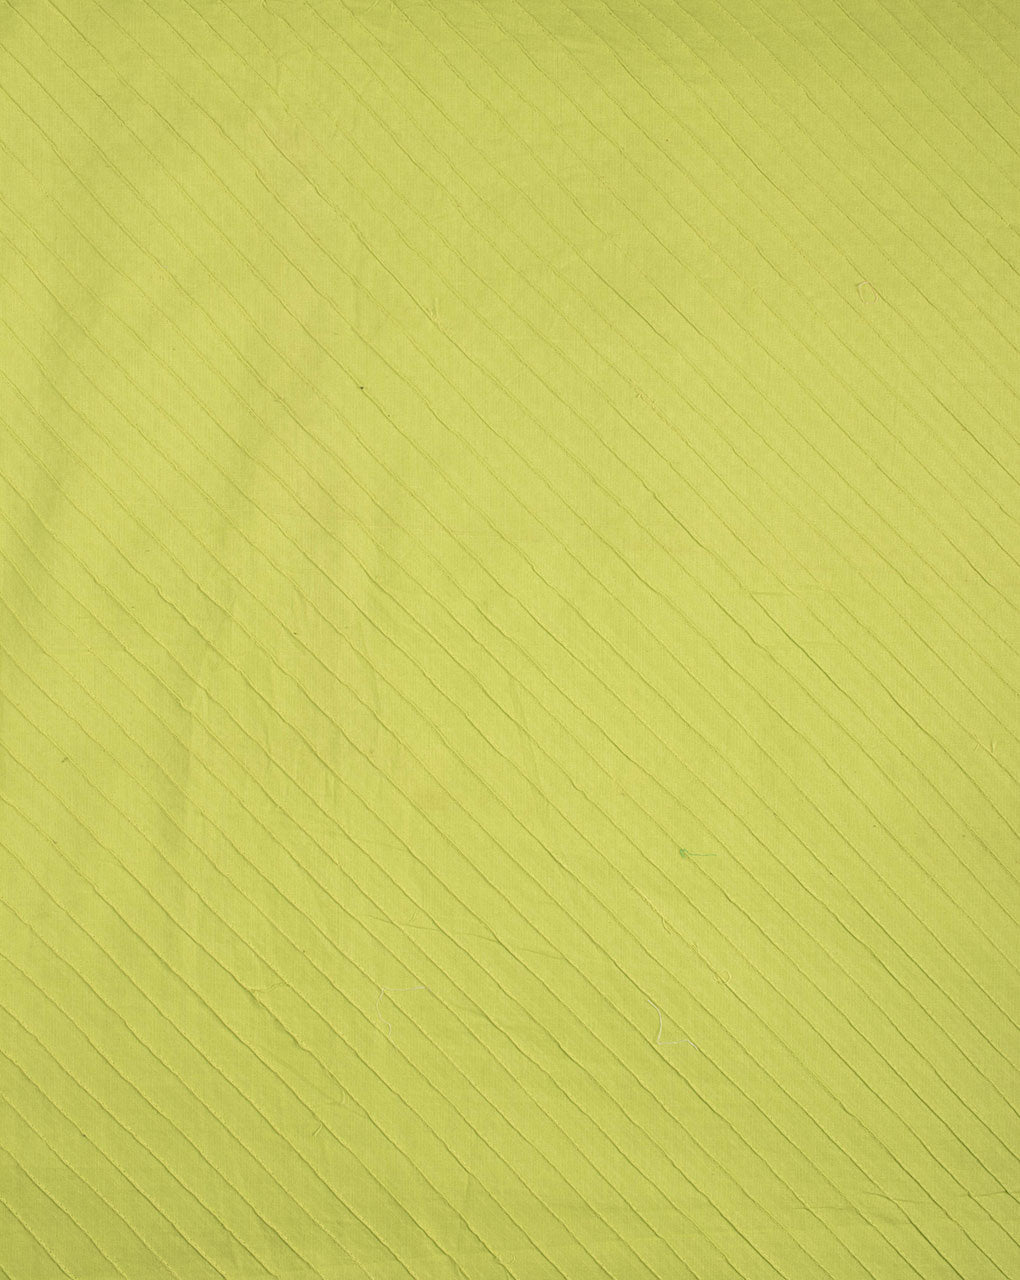 Stripes Pin-Tucks Loom Textured Cotton Fabric ( Width 40 Inch ) - Fabriclore.com